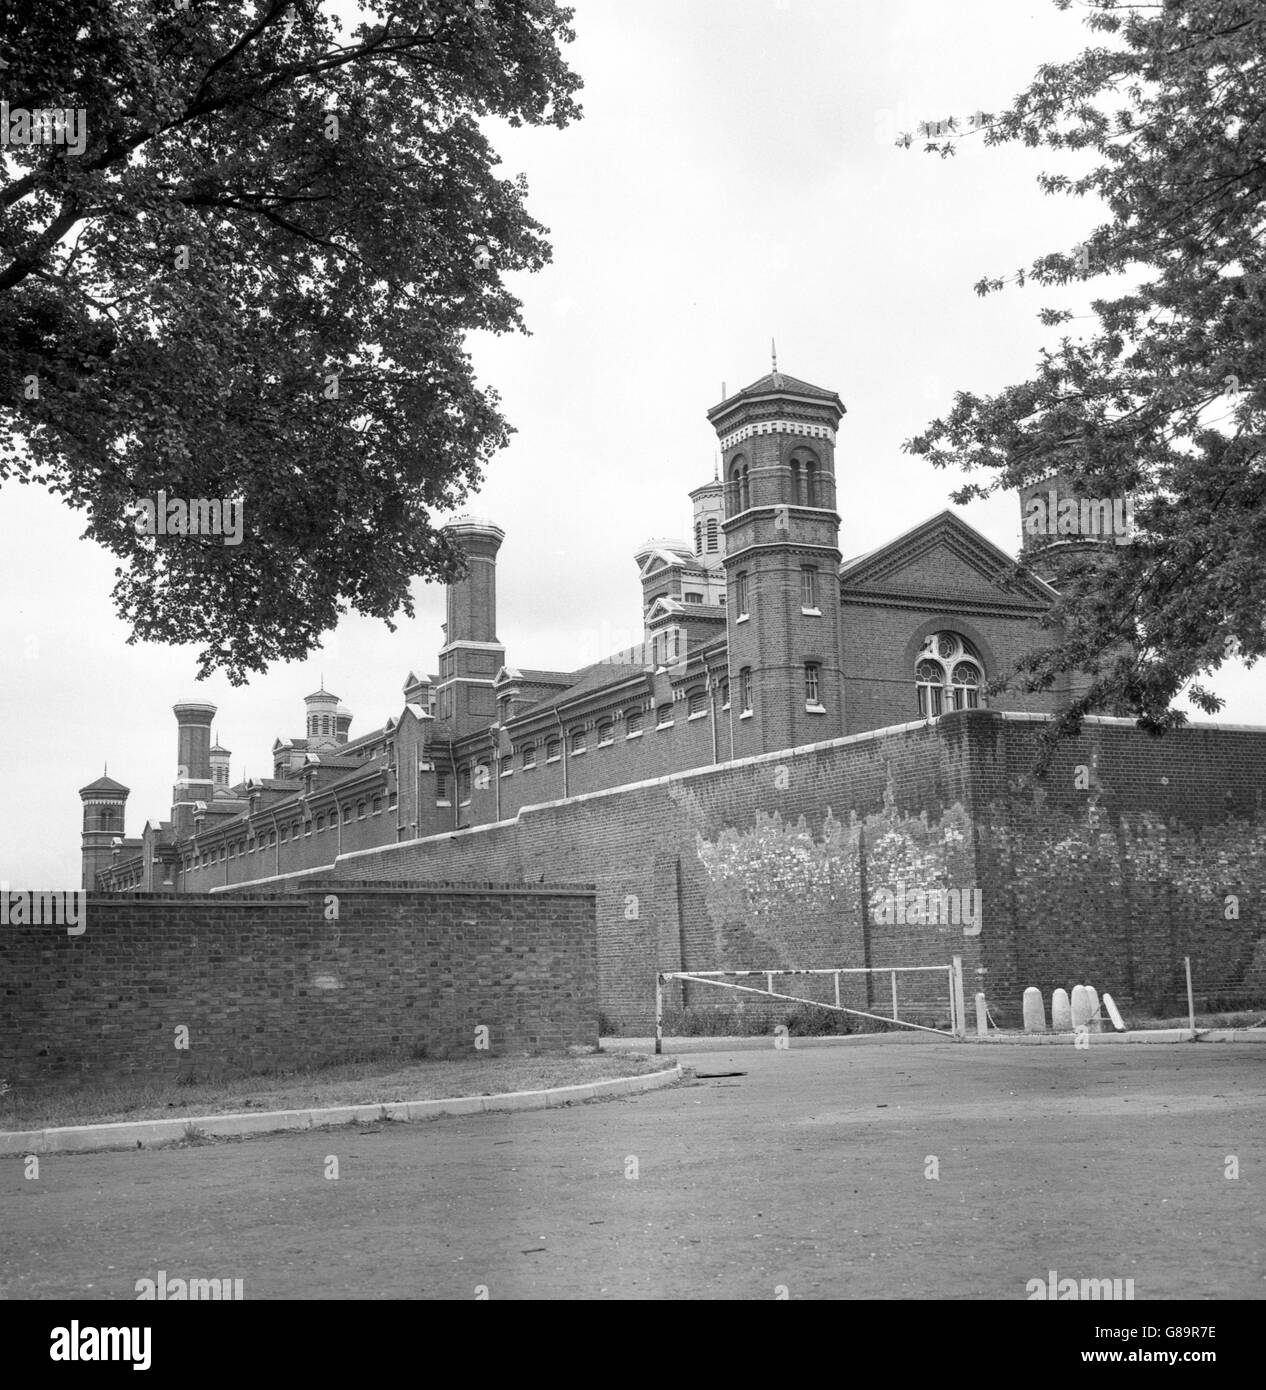 Buildings and Landmarks - HM Prison Wormwood Scrubs - London. HM Prison Wormwood Scrubs in London. Stock Photo